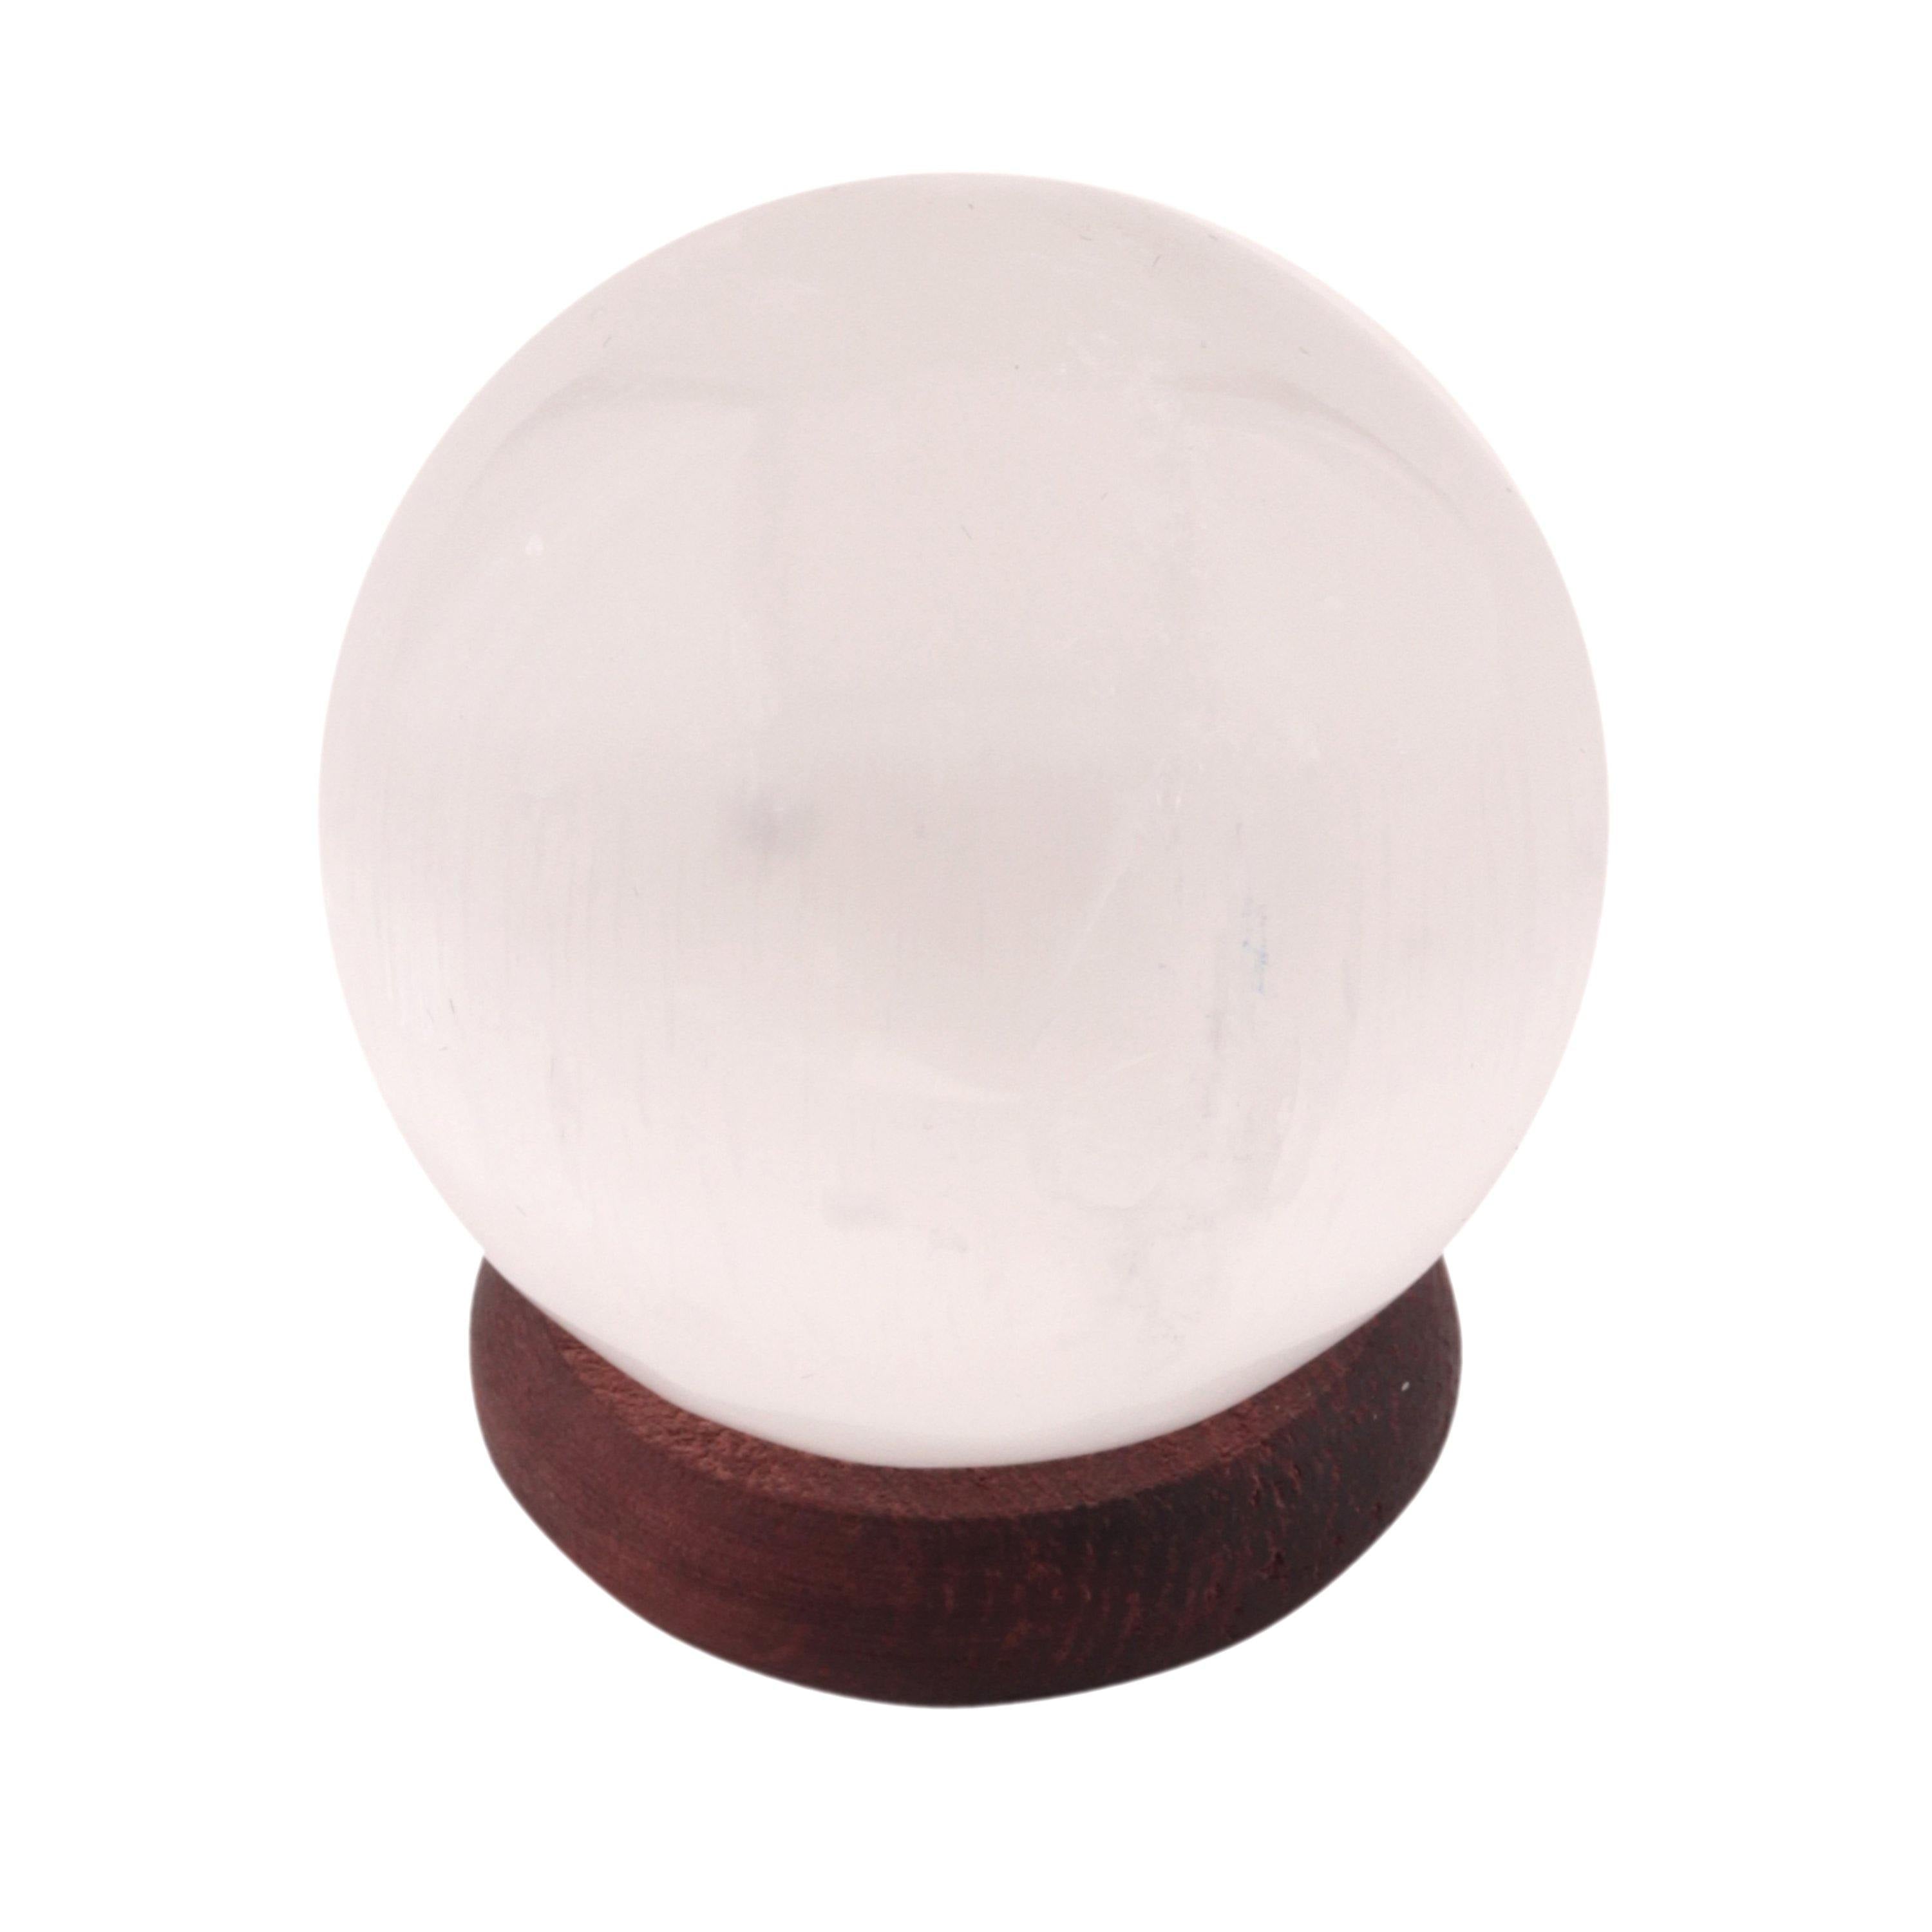 Healing Crystals - White Selenite Sphere 1 Kg Lot